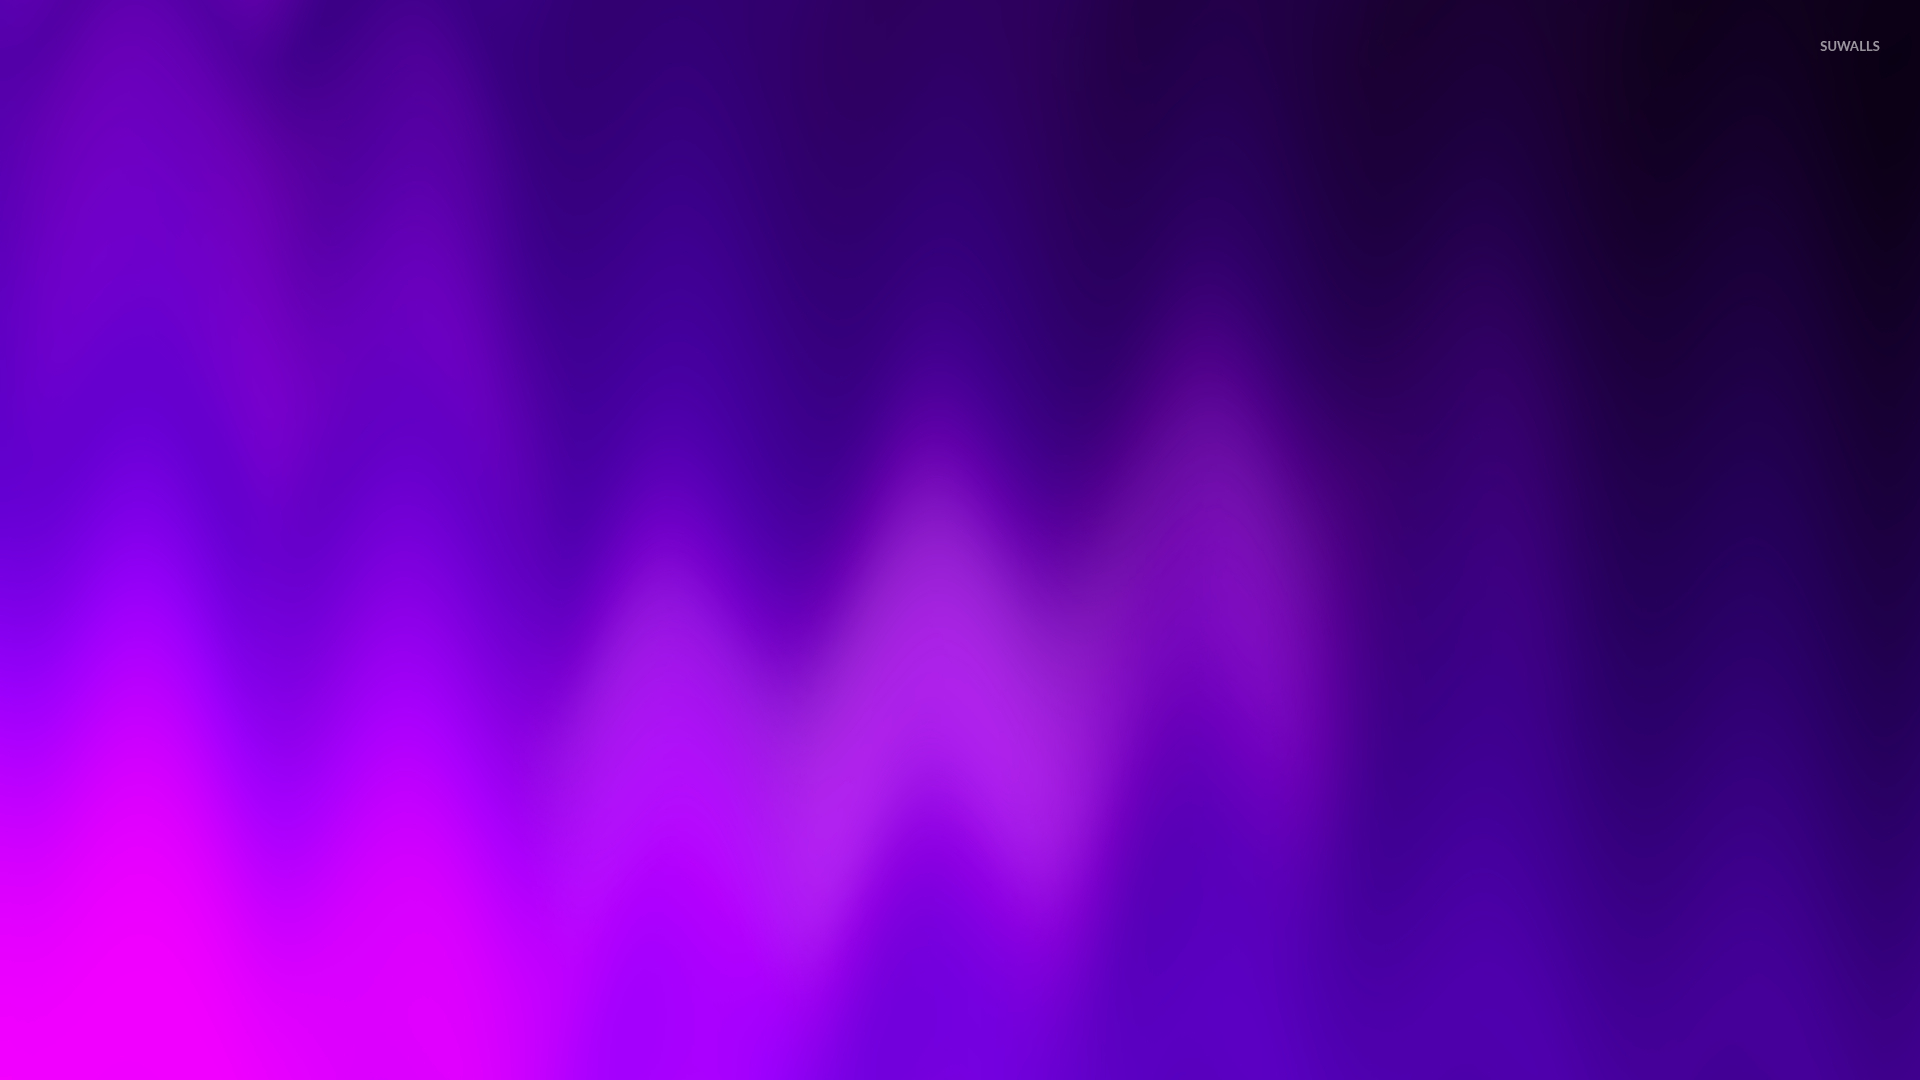 Purple gradient wallpaper - Abstract wallpapers - #27016